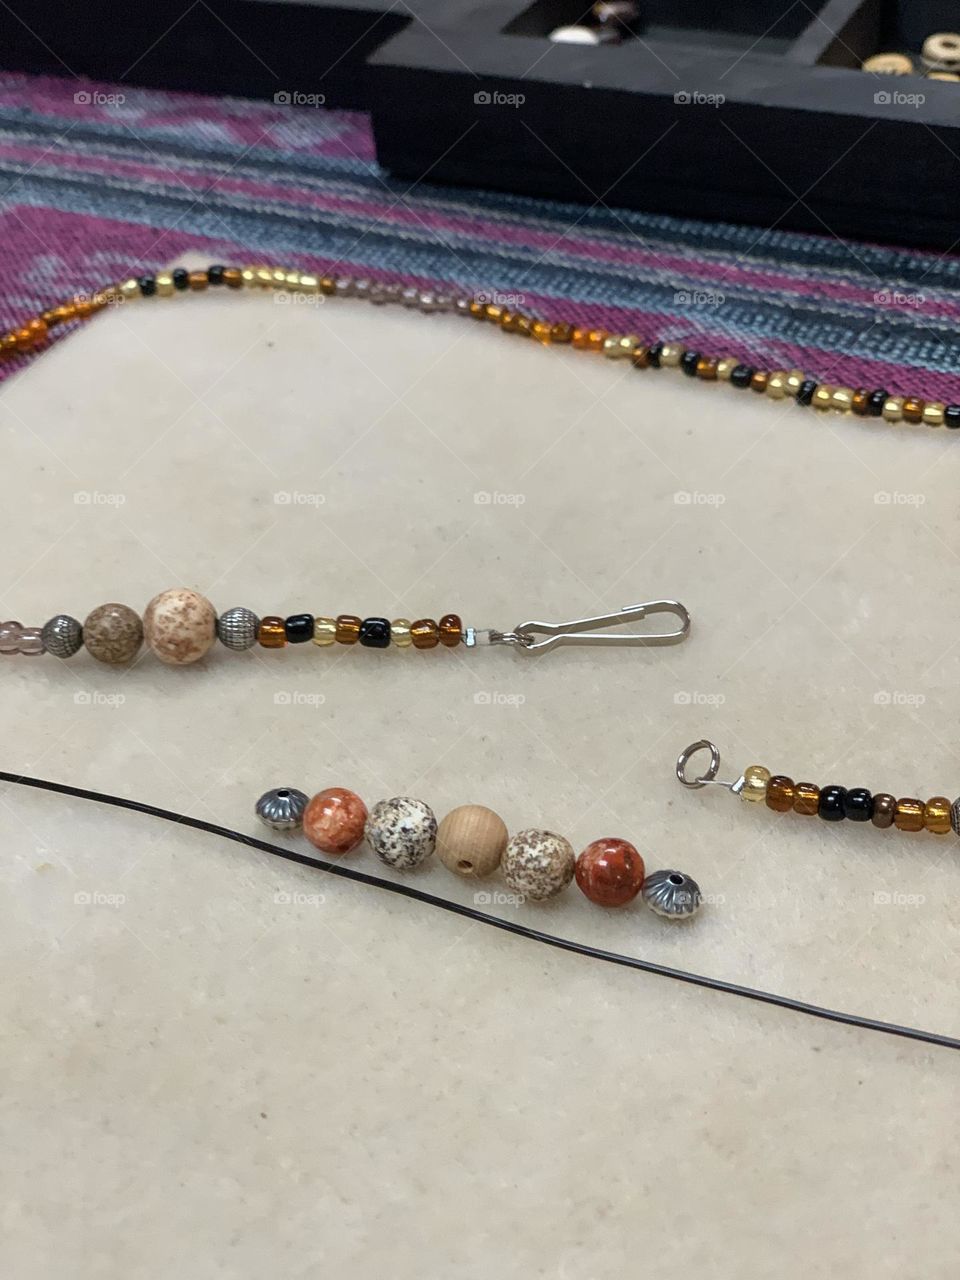 Patterning Beads